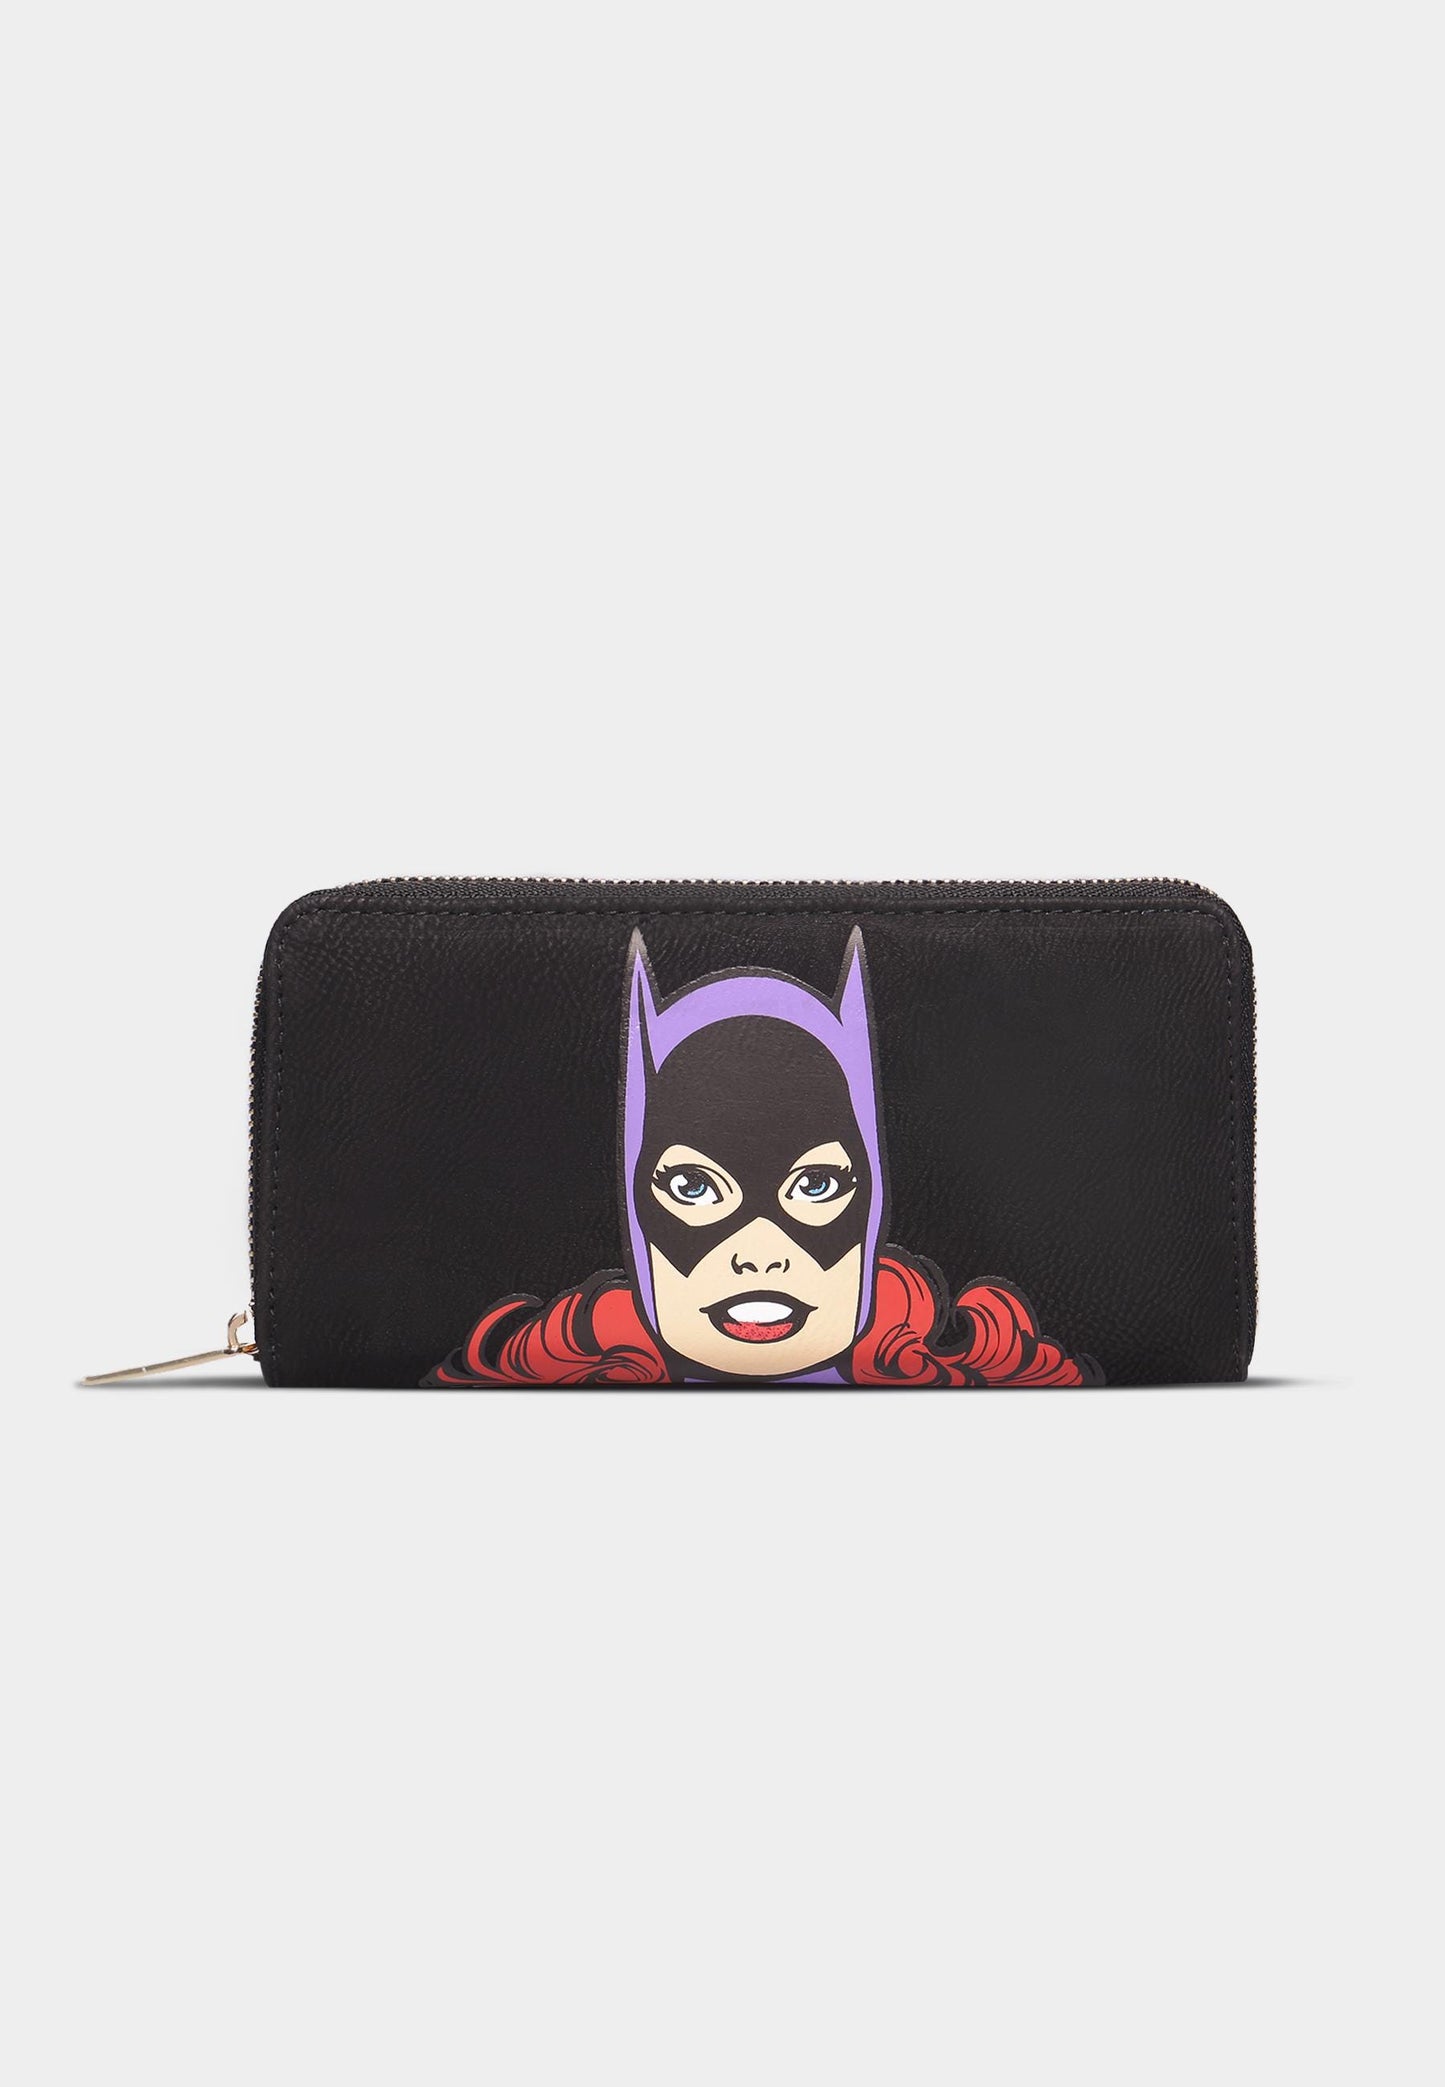 Warner - Bat Girl - Portrait - Zip Around Wallet